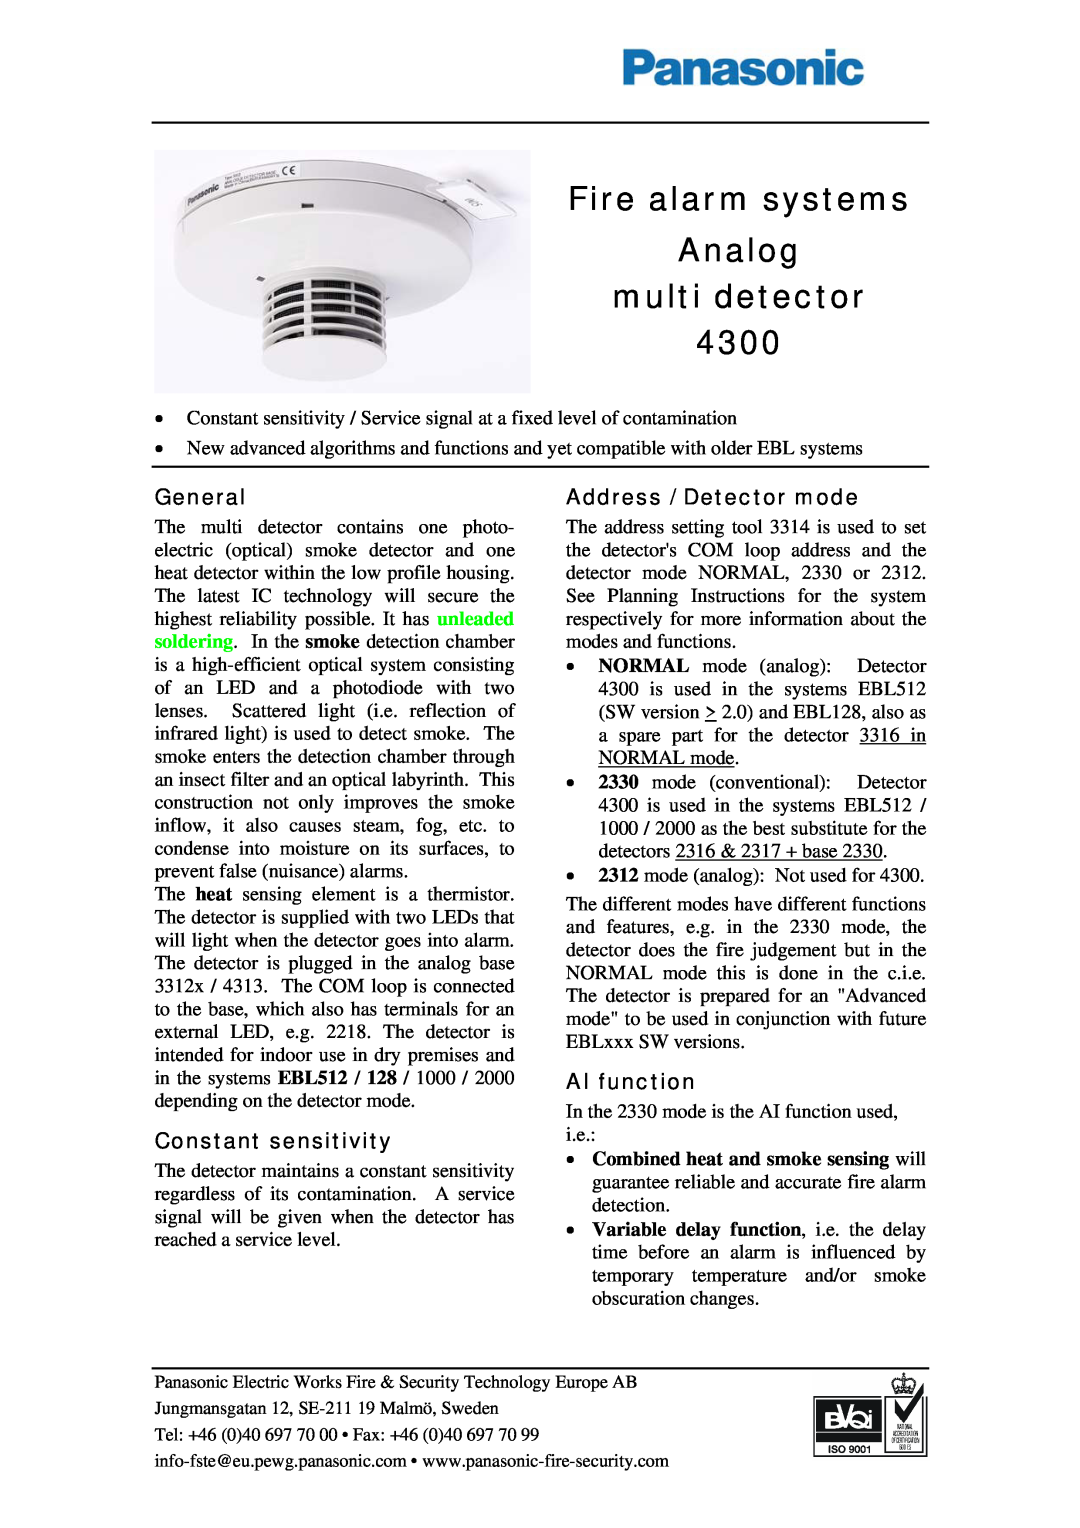 Panasonic 4300 manual Fire alarm systems Analog multi detector, General, Constant sensitivity, Address / Detector mode 